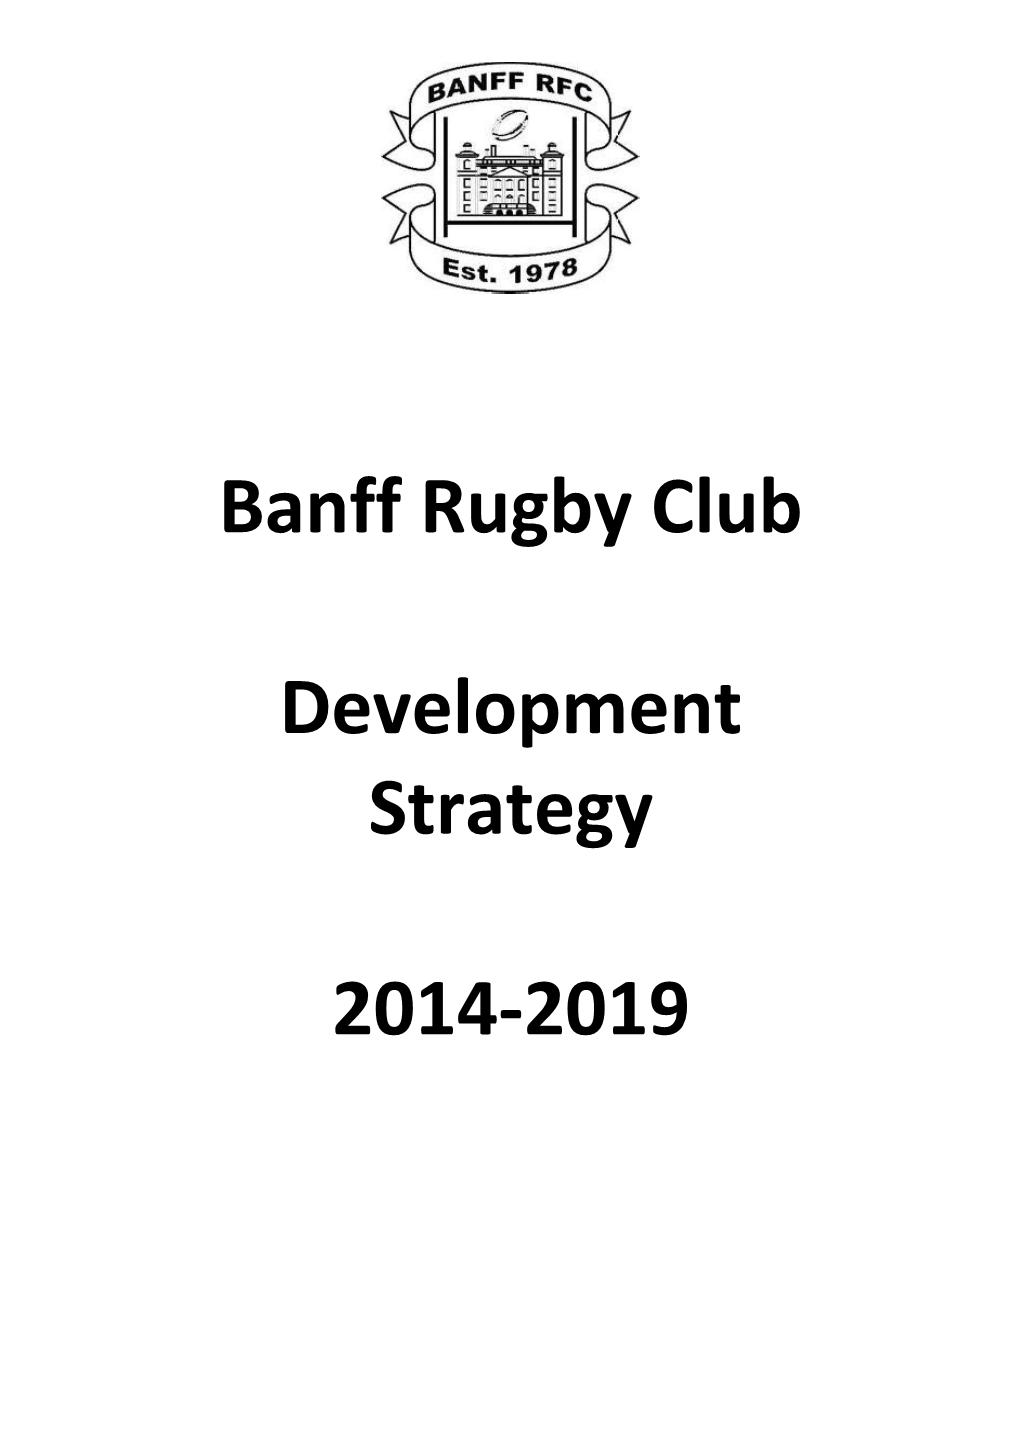 Banff Rugby Club Development Plan